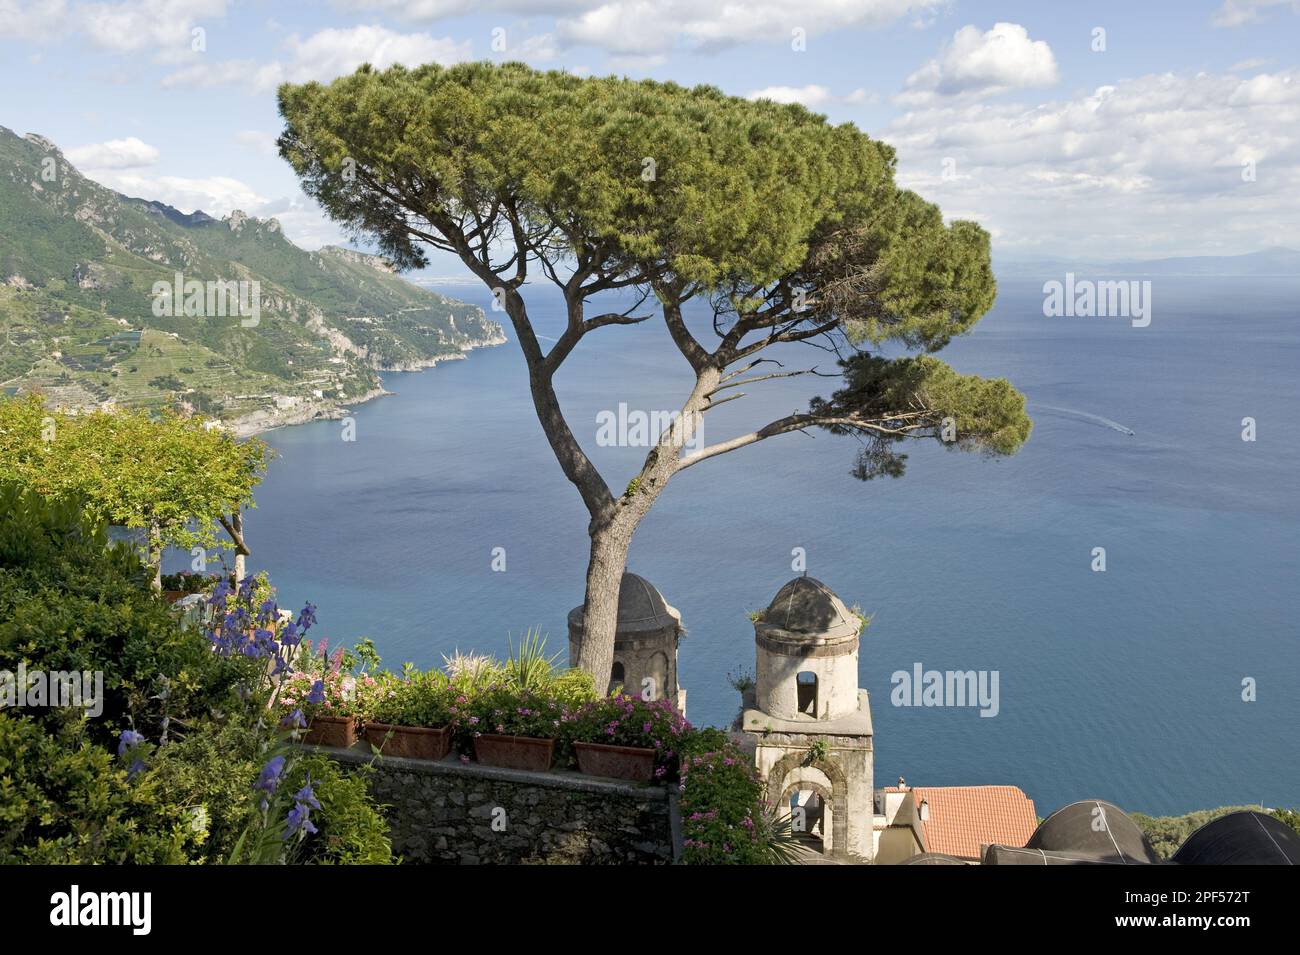 Pine, stone pine, Mediterranean Pine, Umbrella Pine (Pinus pinea), Pine family, Stone Pine habit, View of the Amalfi Coast and chapel from the Stock Photo